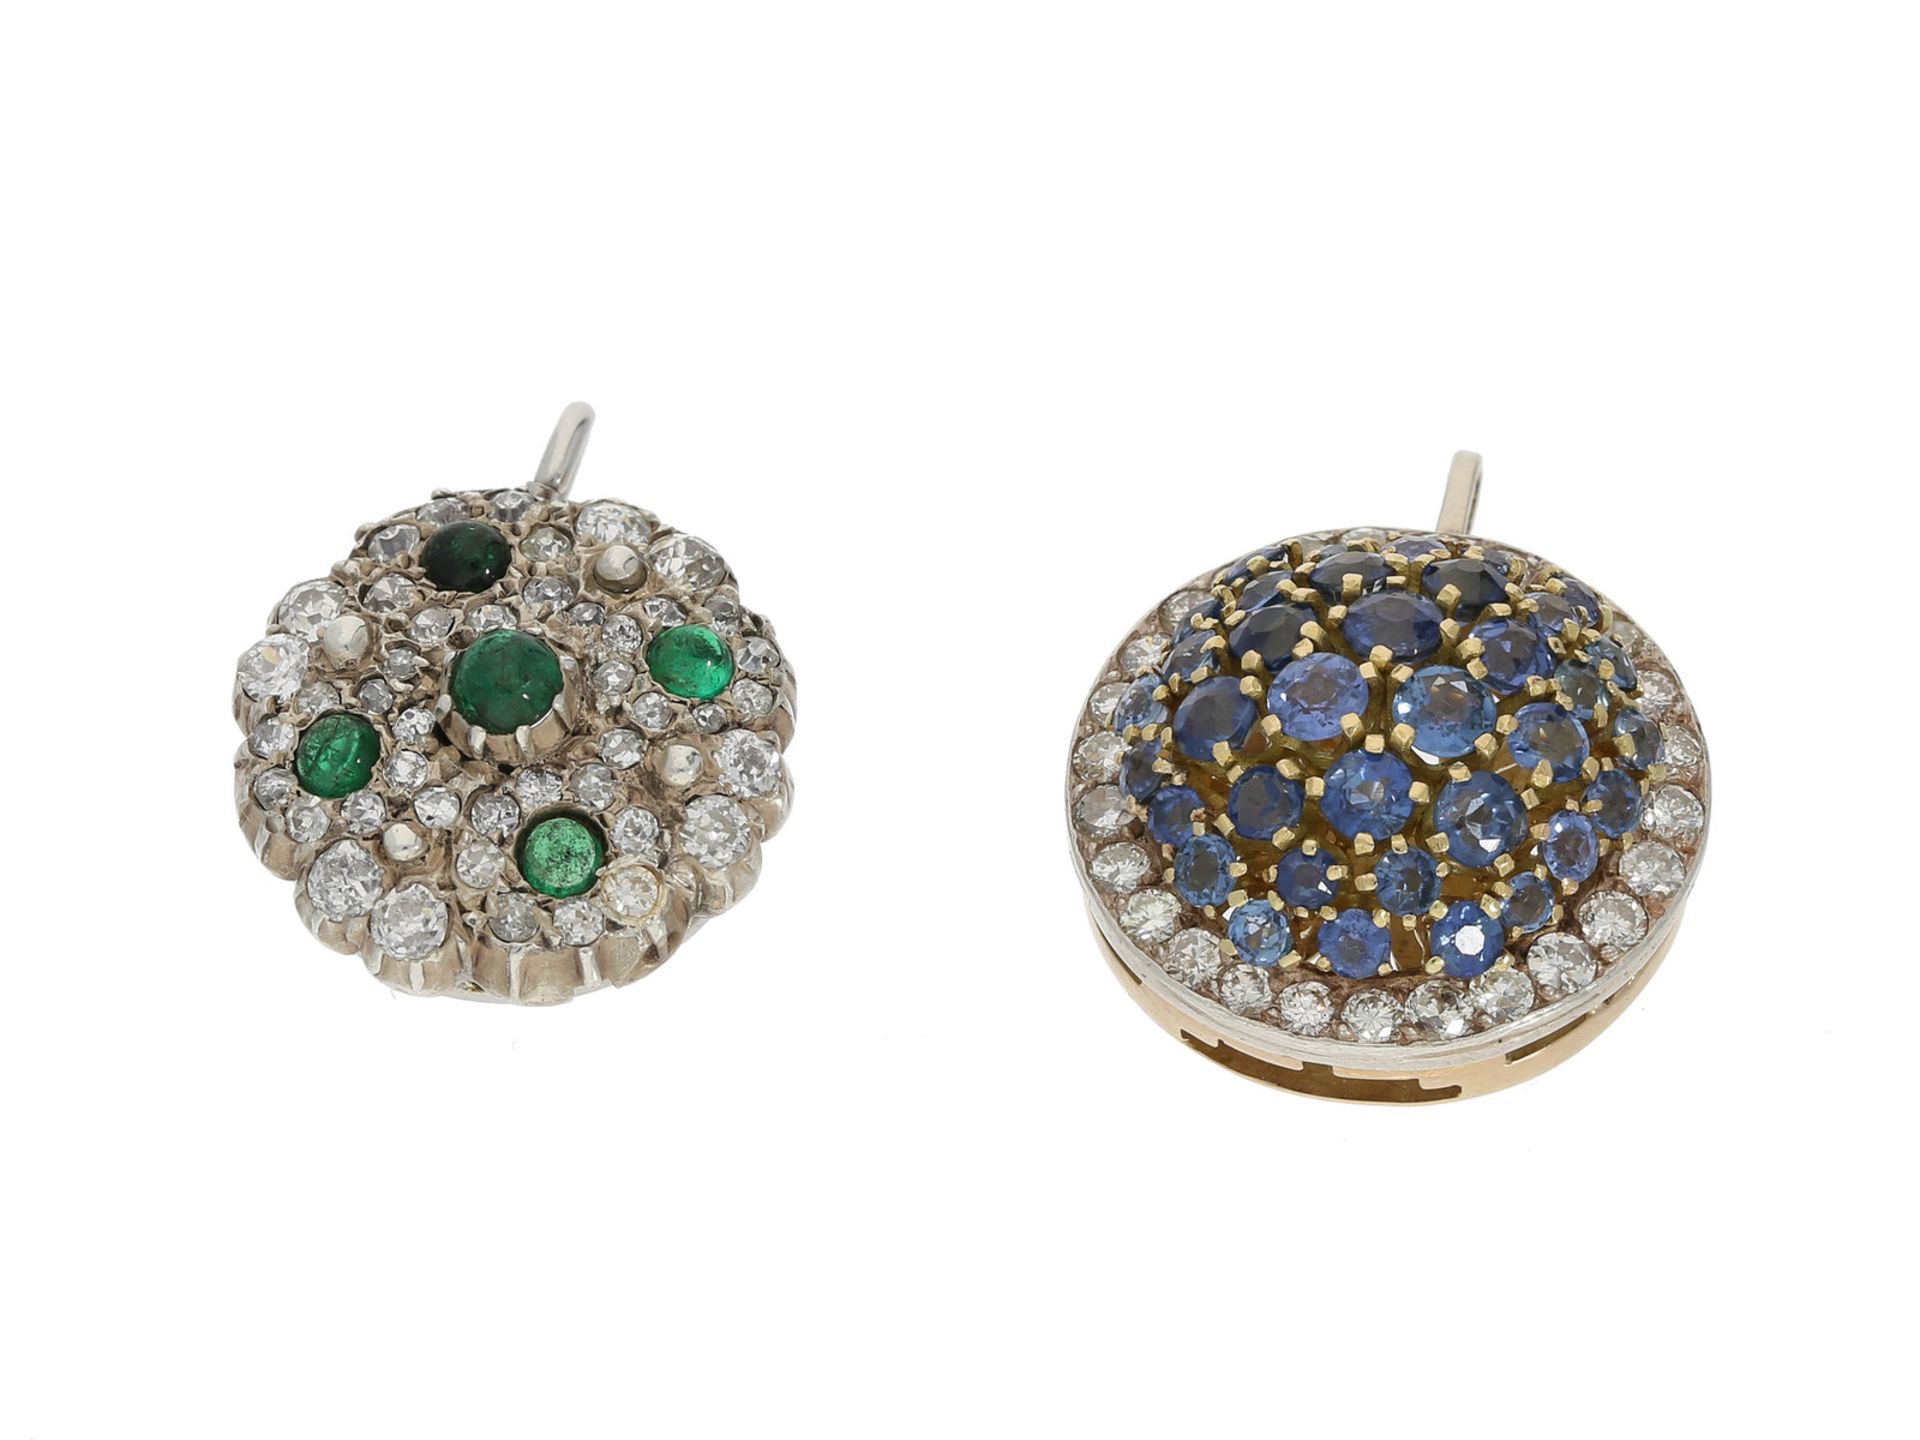 Anhänger: 1 antiker Smaragd/Diamantanhänger und 1 vintage Saphir/Brillantanhänger 1. ca. 24,5 x 18,